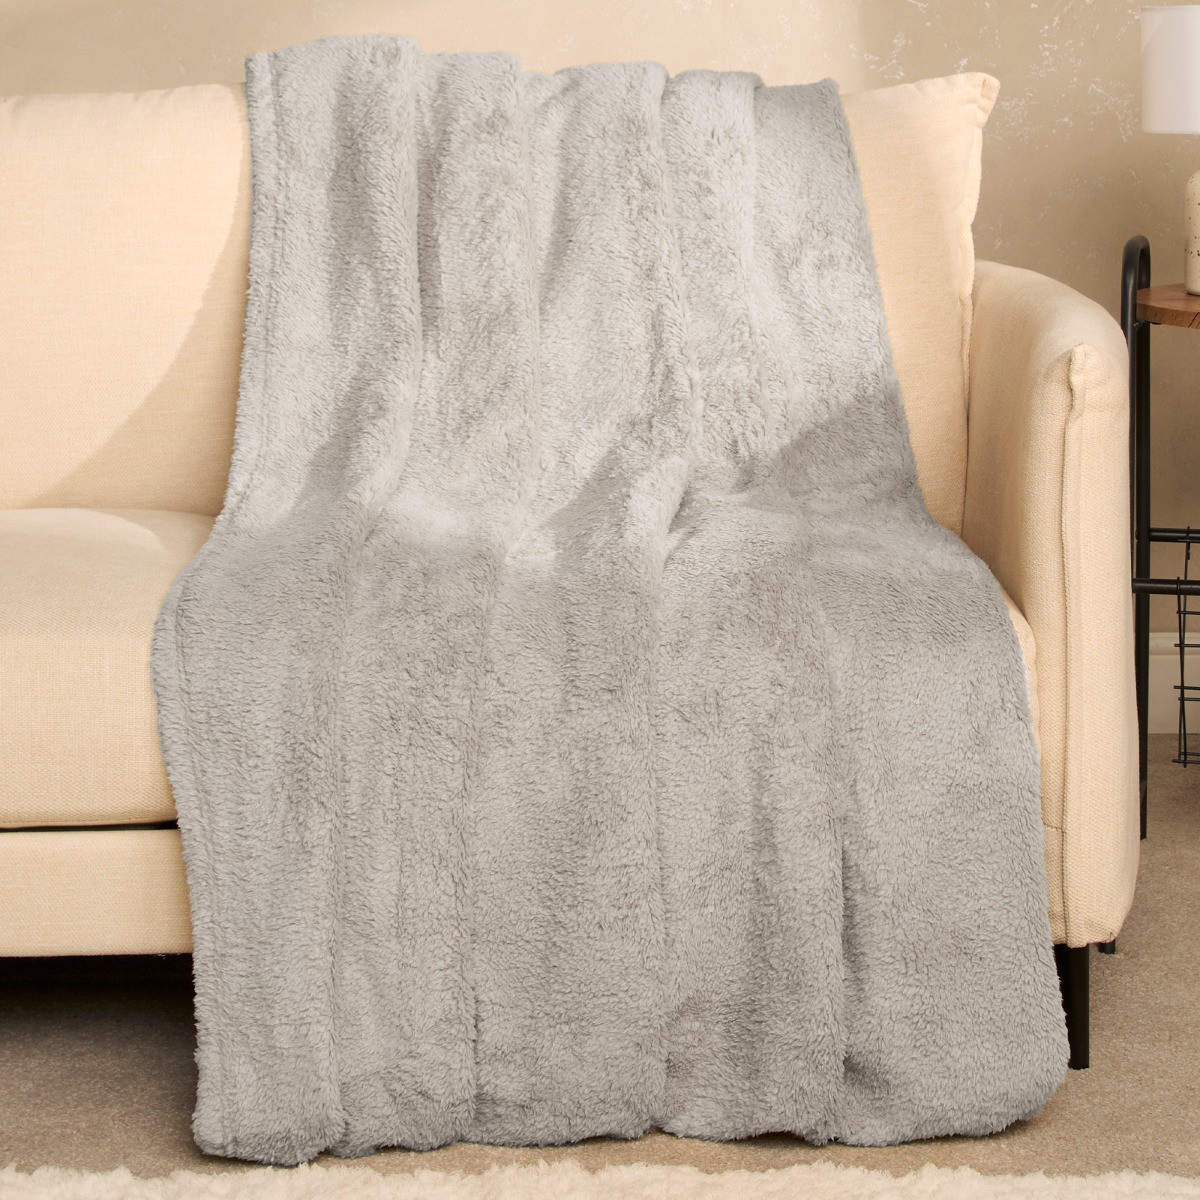 Brentfords Teddy Fleece Blanket Soft Throw Over Bed, Silver Grey - 125 x 150cm>